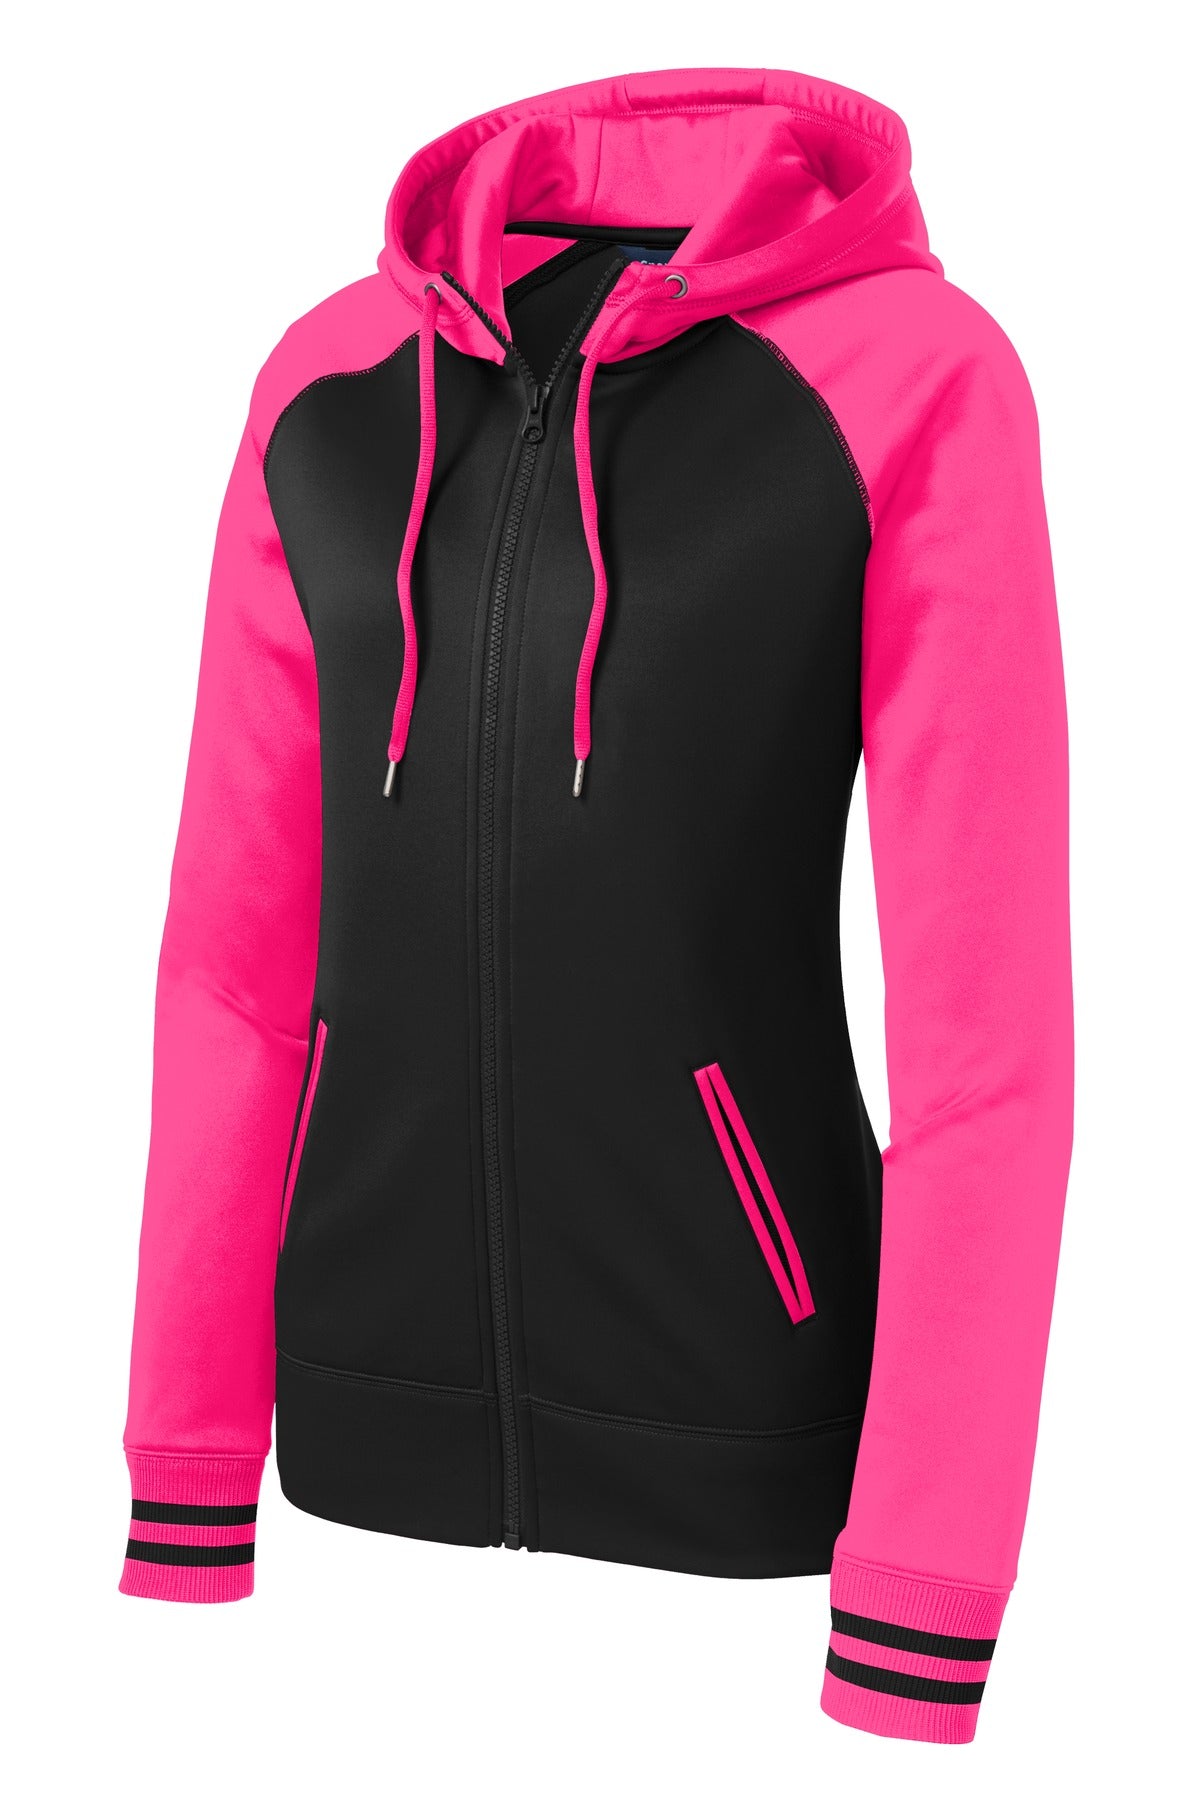 Sport-Tek Ladies Sport-Wick Varsity Fleece Full-Zip Hooded Jacket. LST236